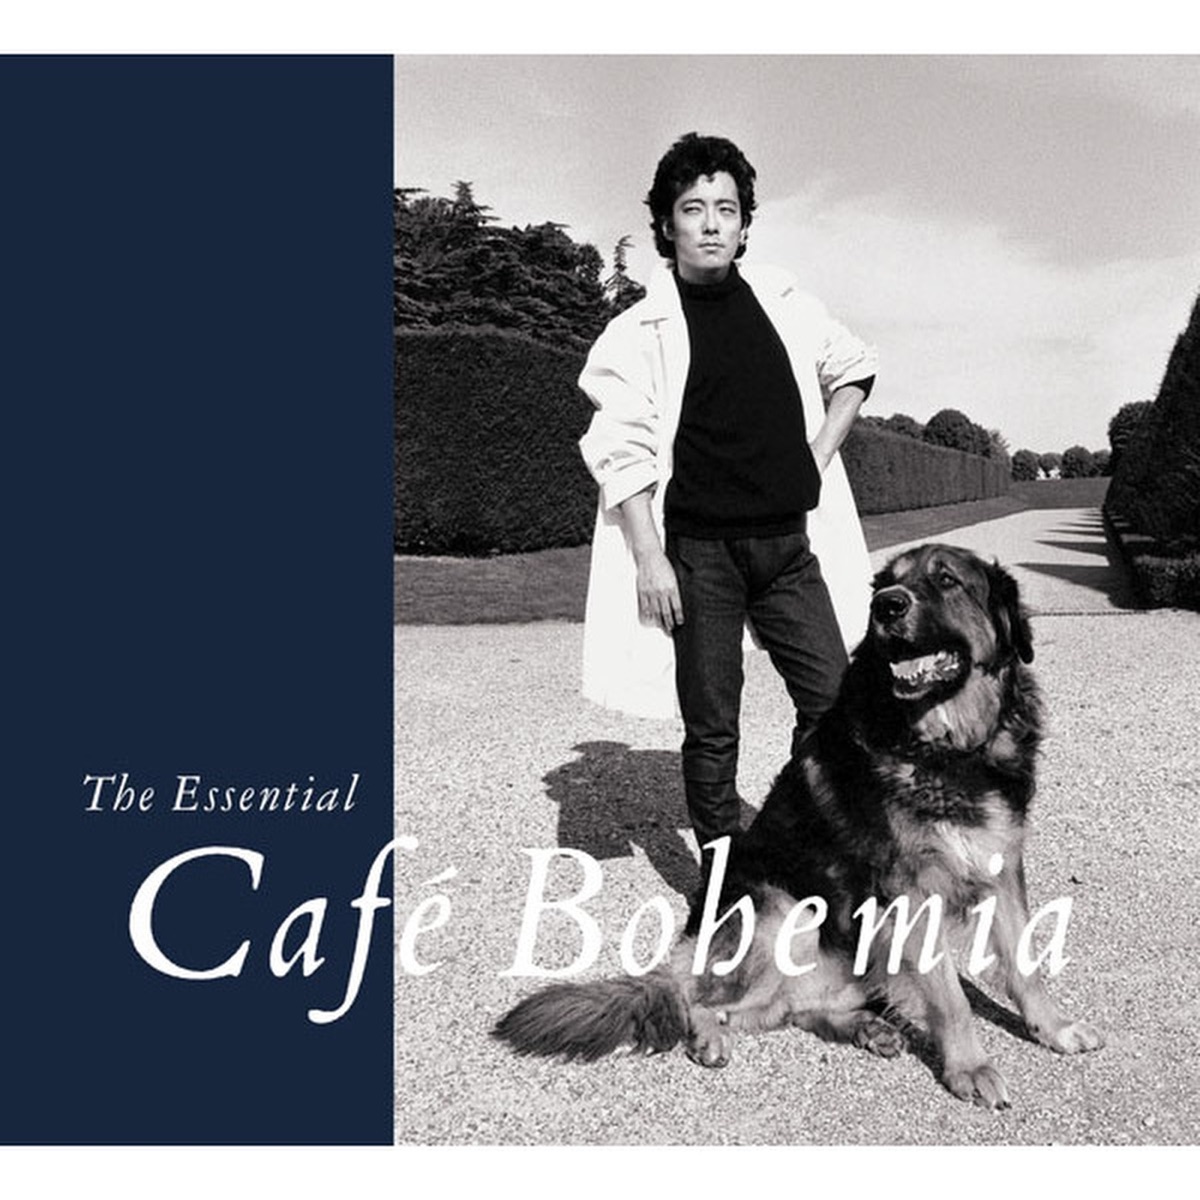 ‎The Essential Cafe Bohemia - 佐野元春のアルバム - Apple Music